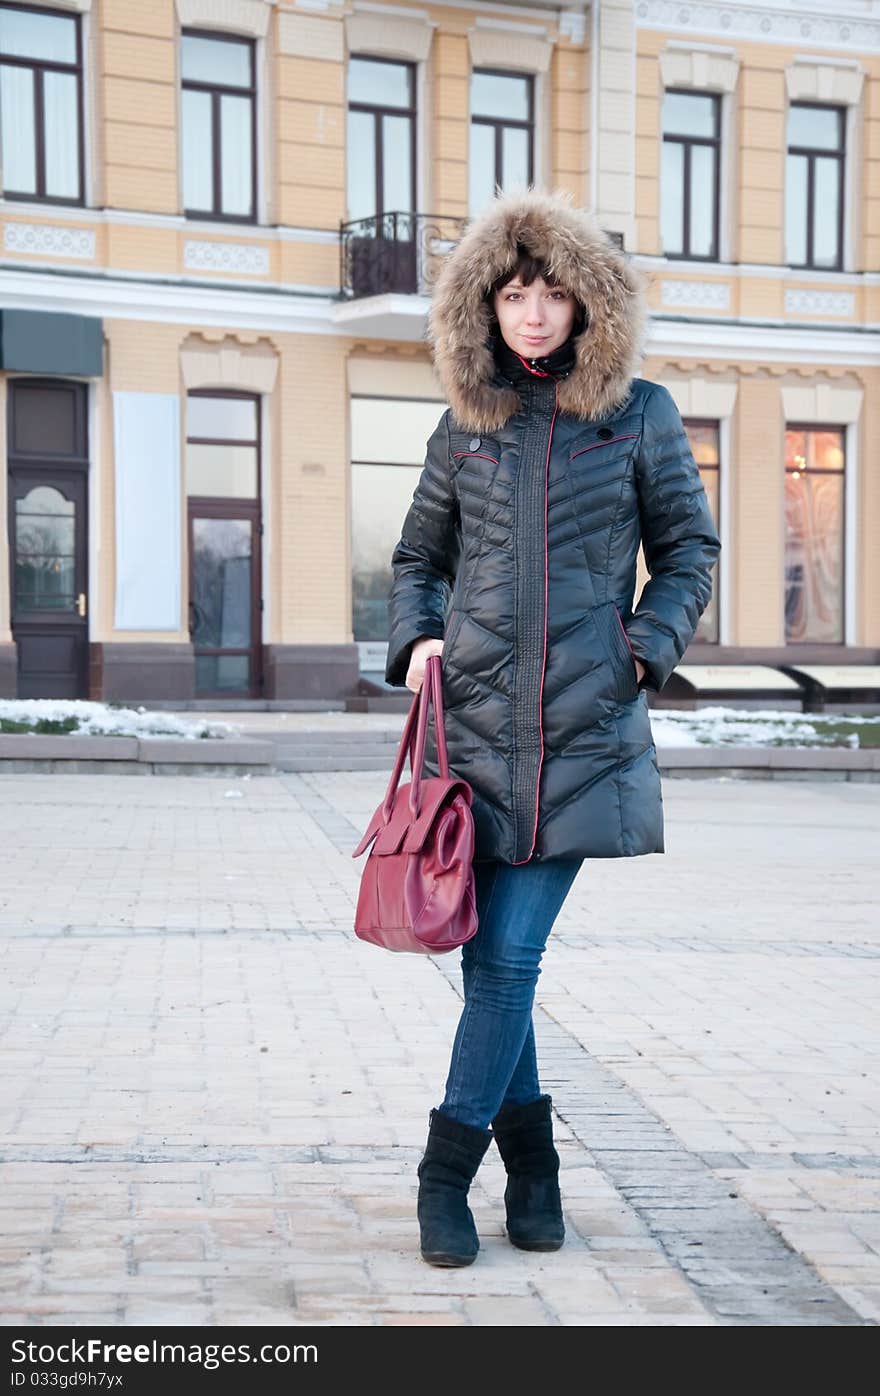 Girl in winter jacket on the street. Girl in winter jacket on the street